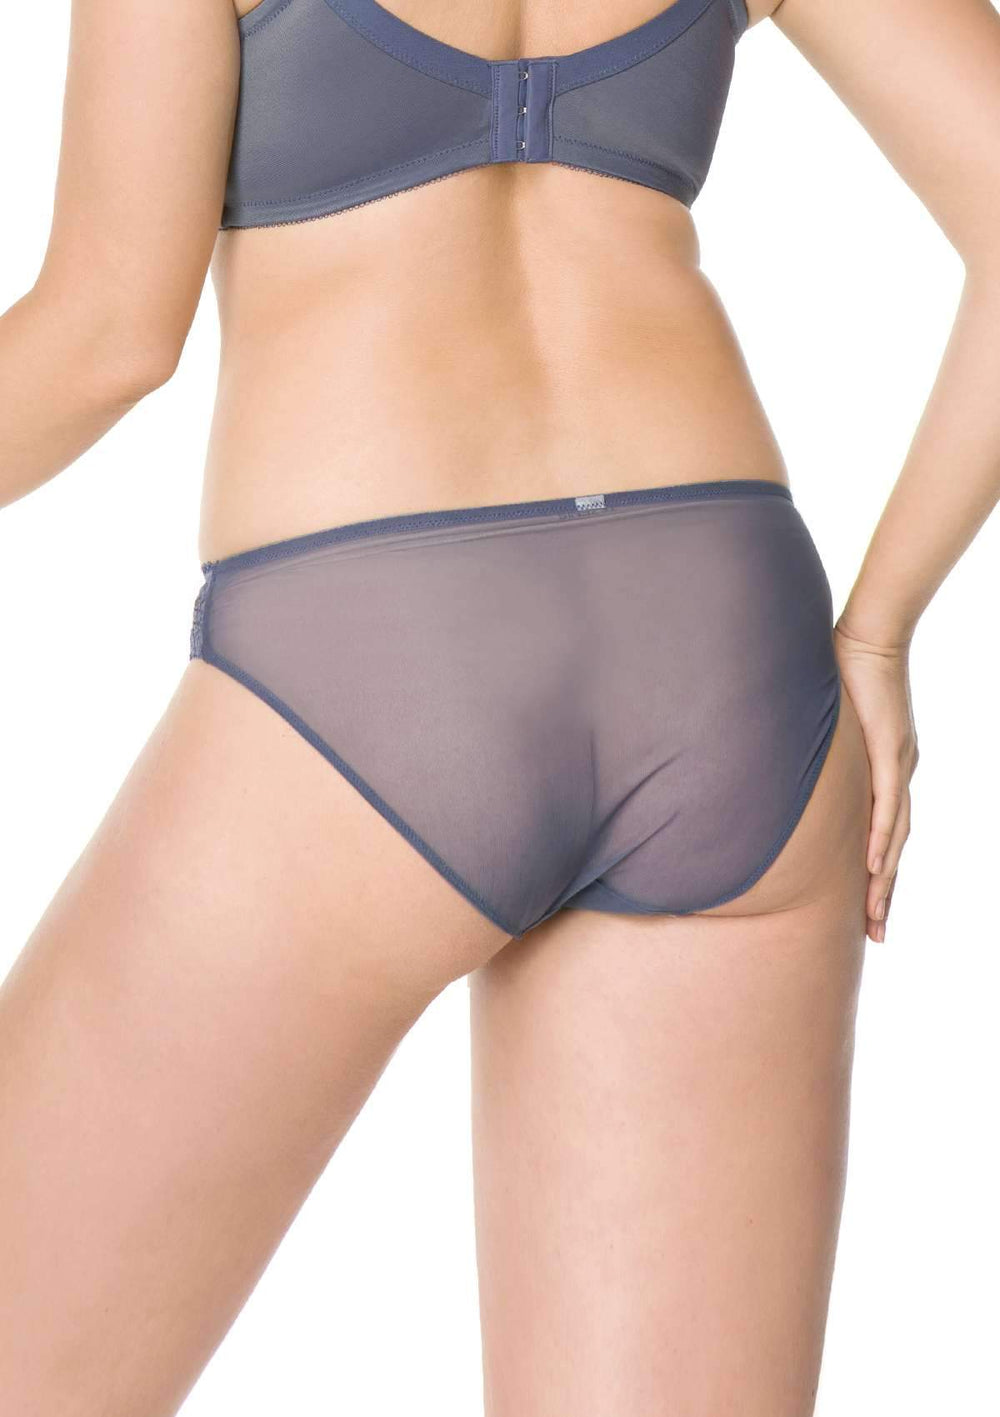 Fitora Women's Nylon Spandex Lace Bikini Panties Underwear 3 Pack (S-XL)